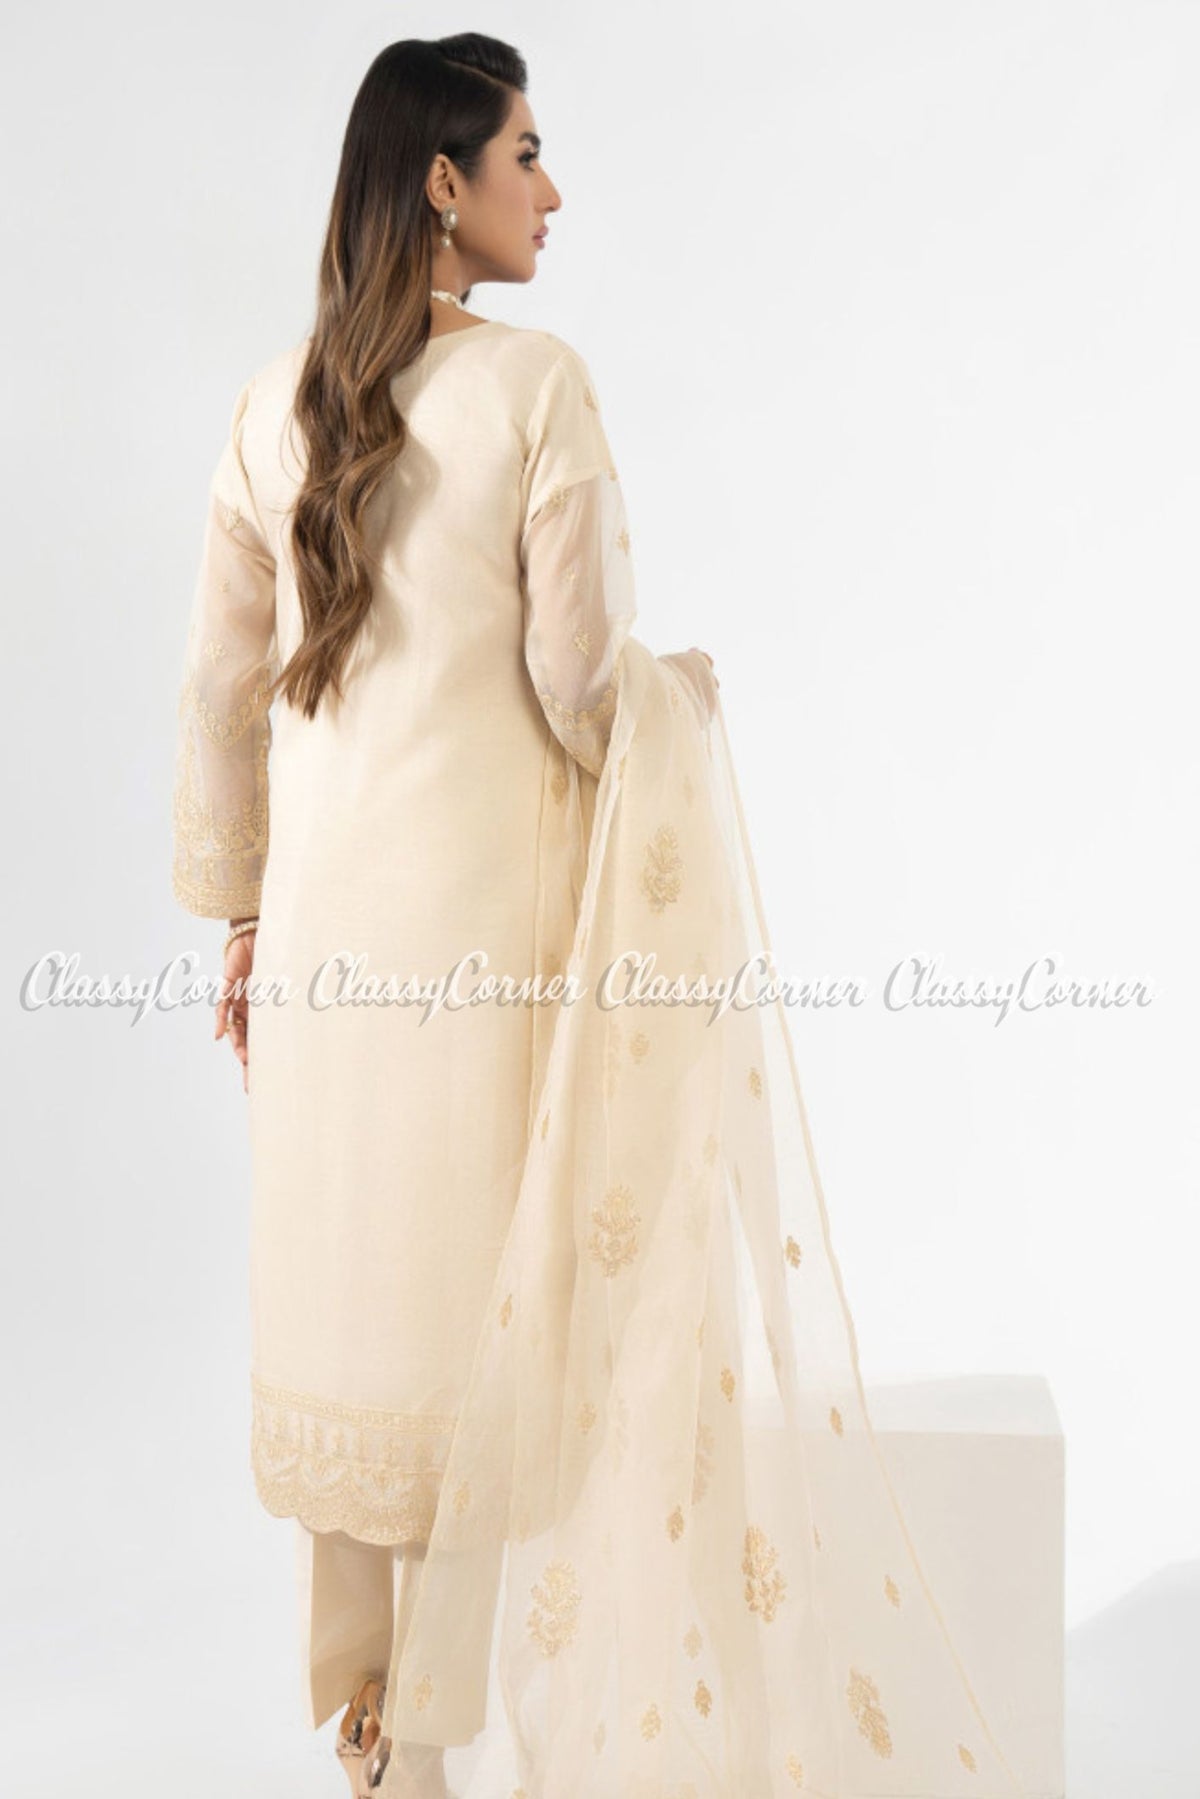 desi pakistani wedding outfits